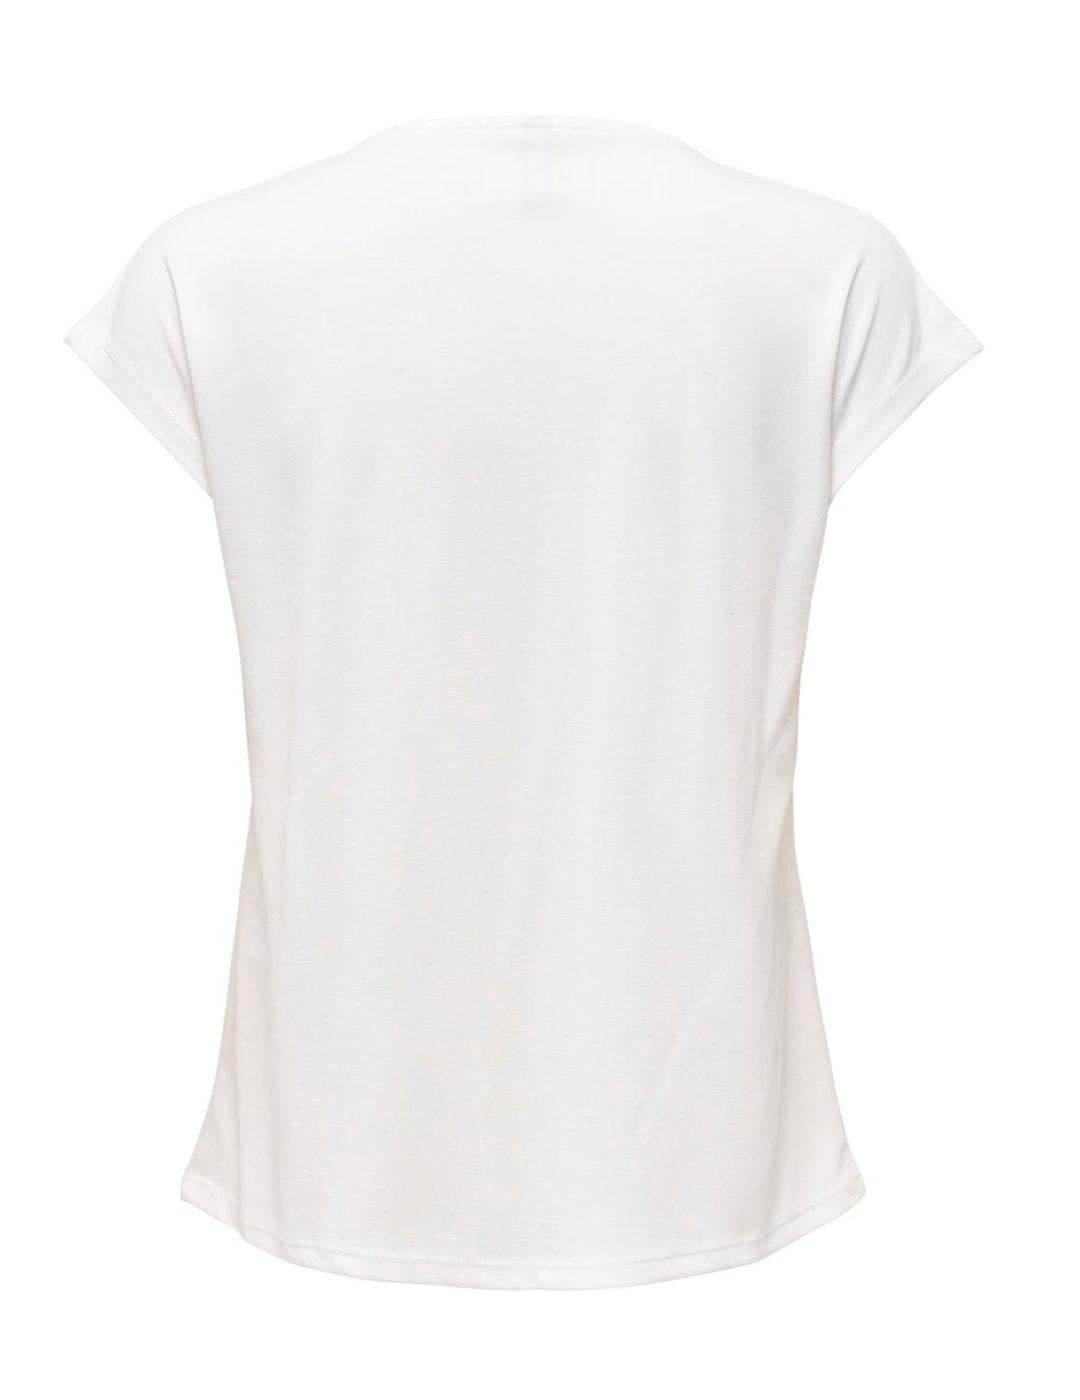 Camiseta Only Free blanca cuello pico manga corta de mujer